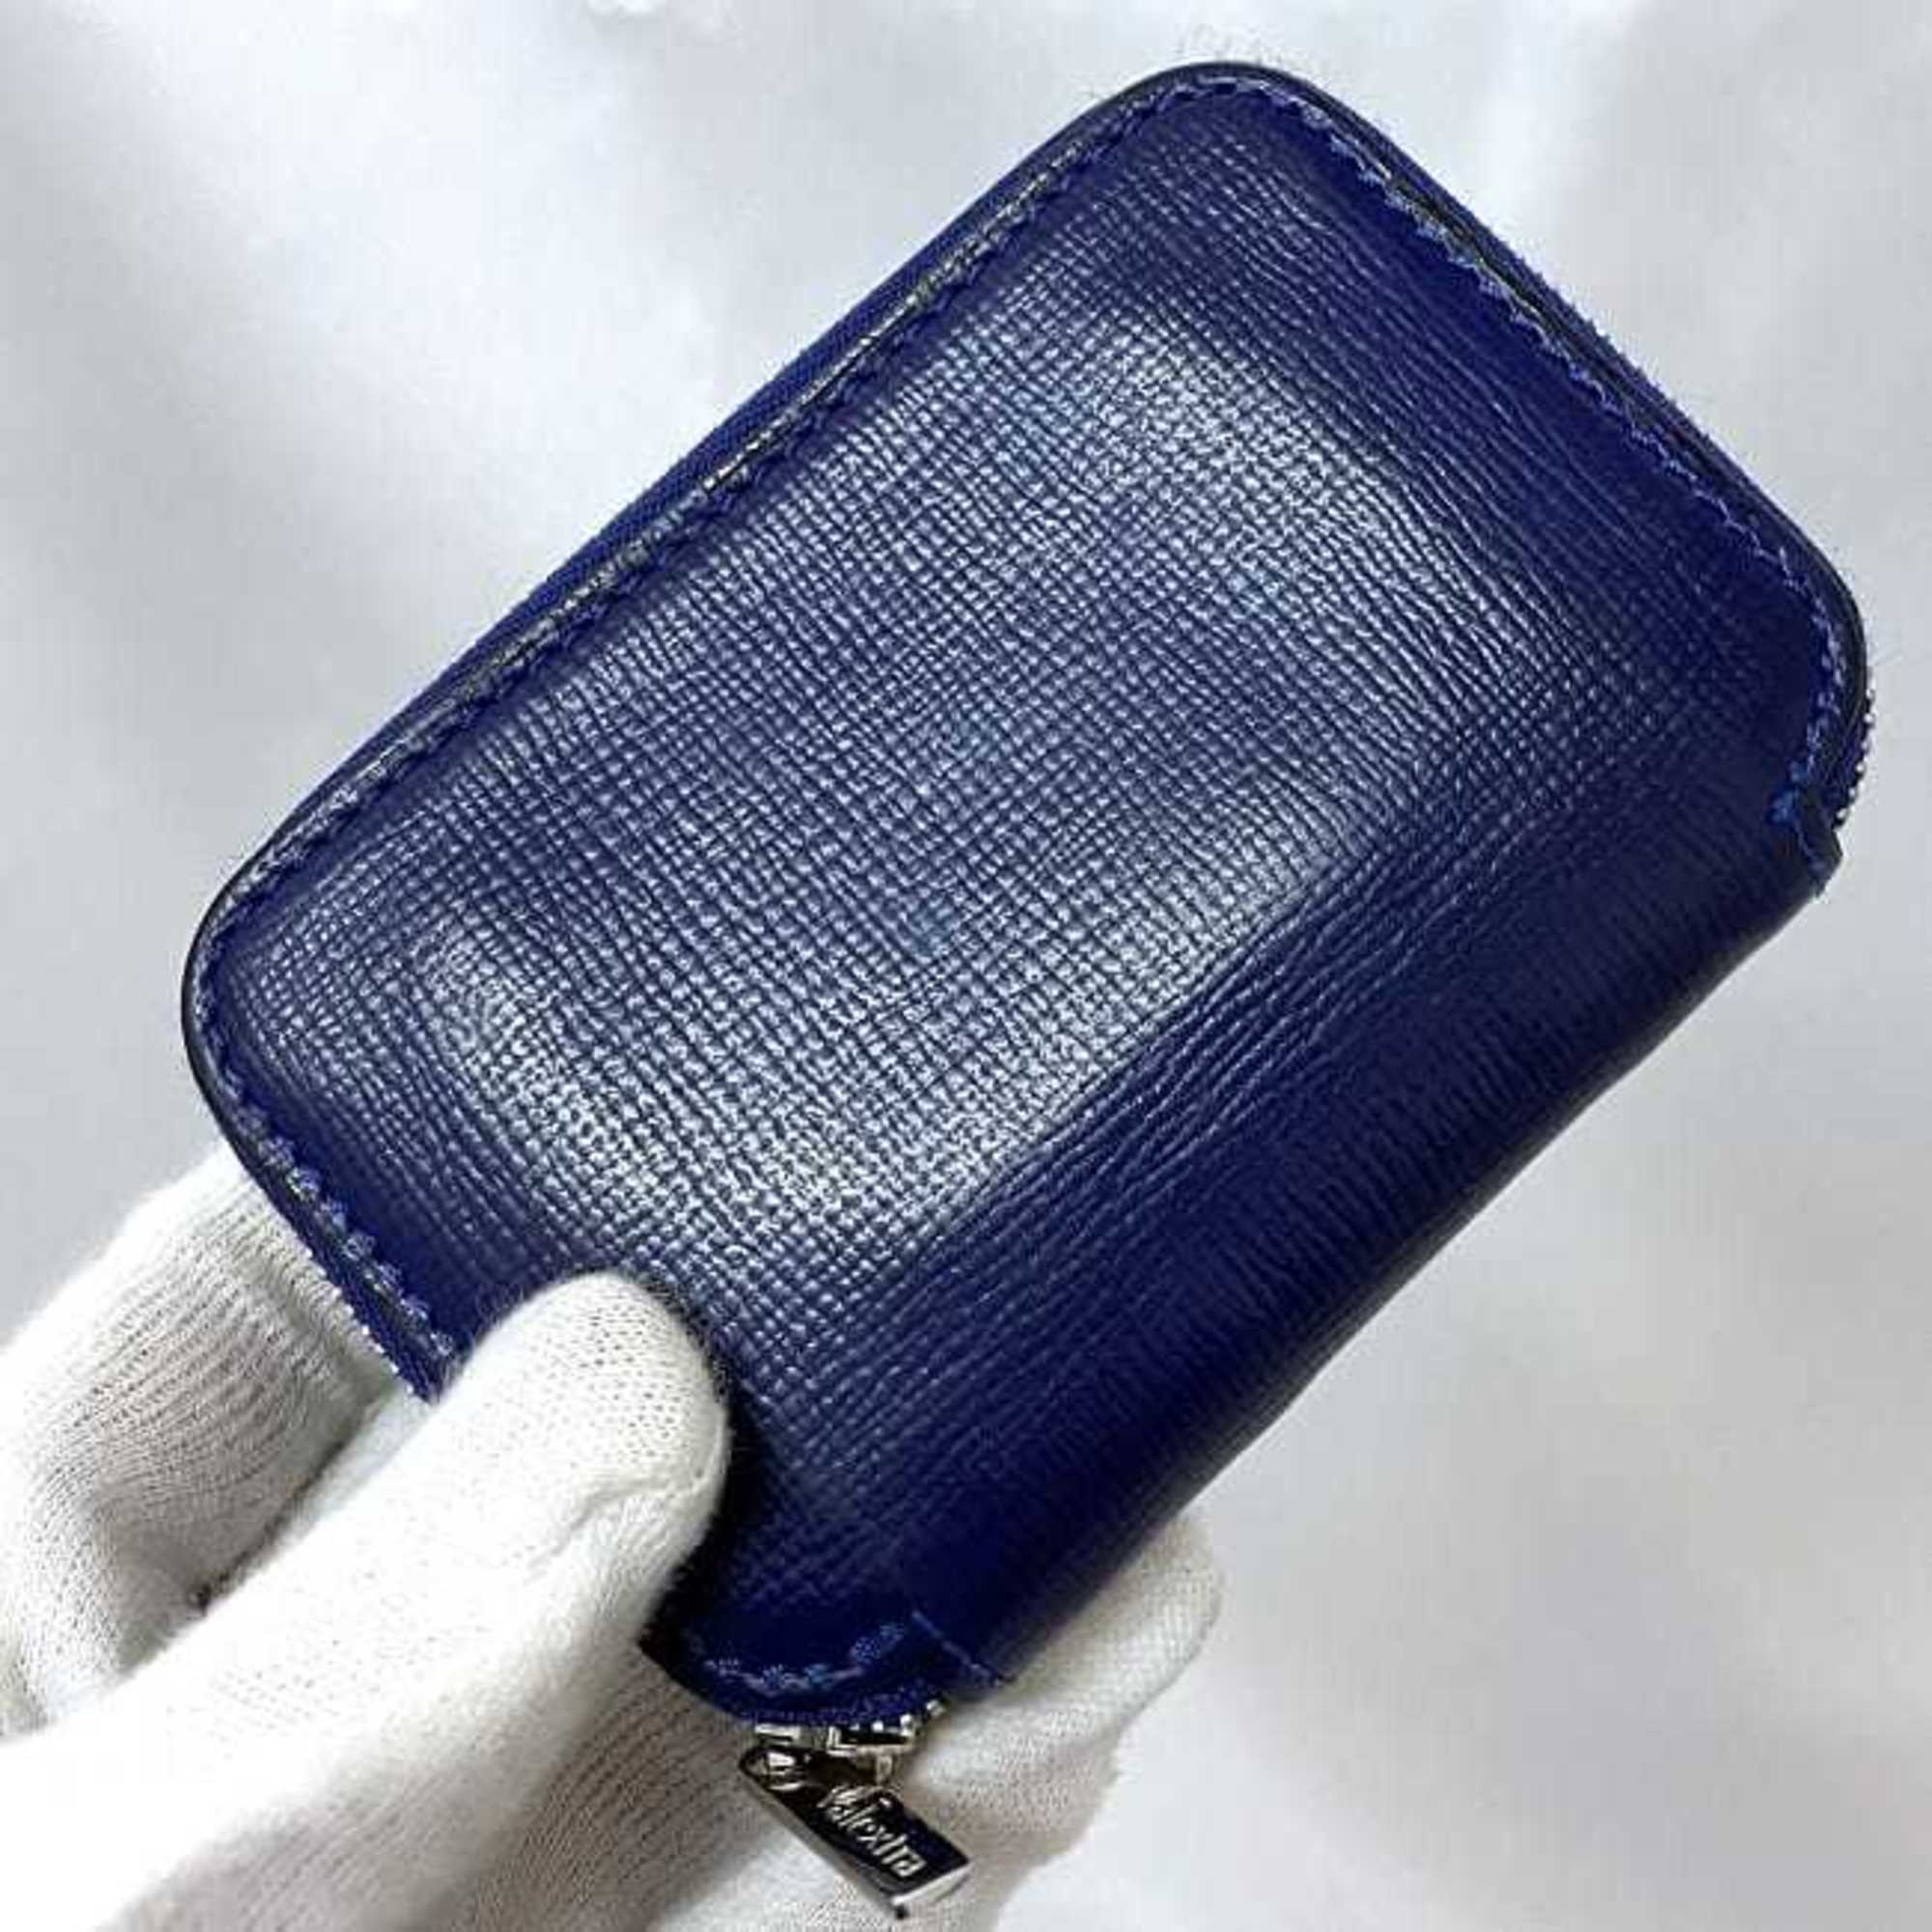 Valextra Coin Case Navy Blue V2L10 Purse Leather Women's Men's